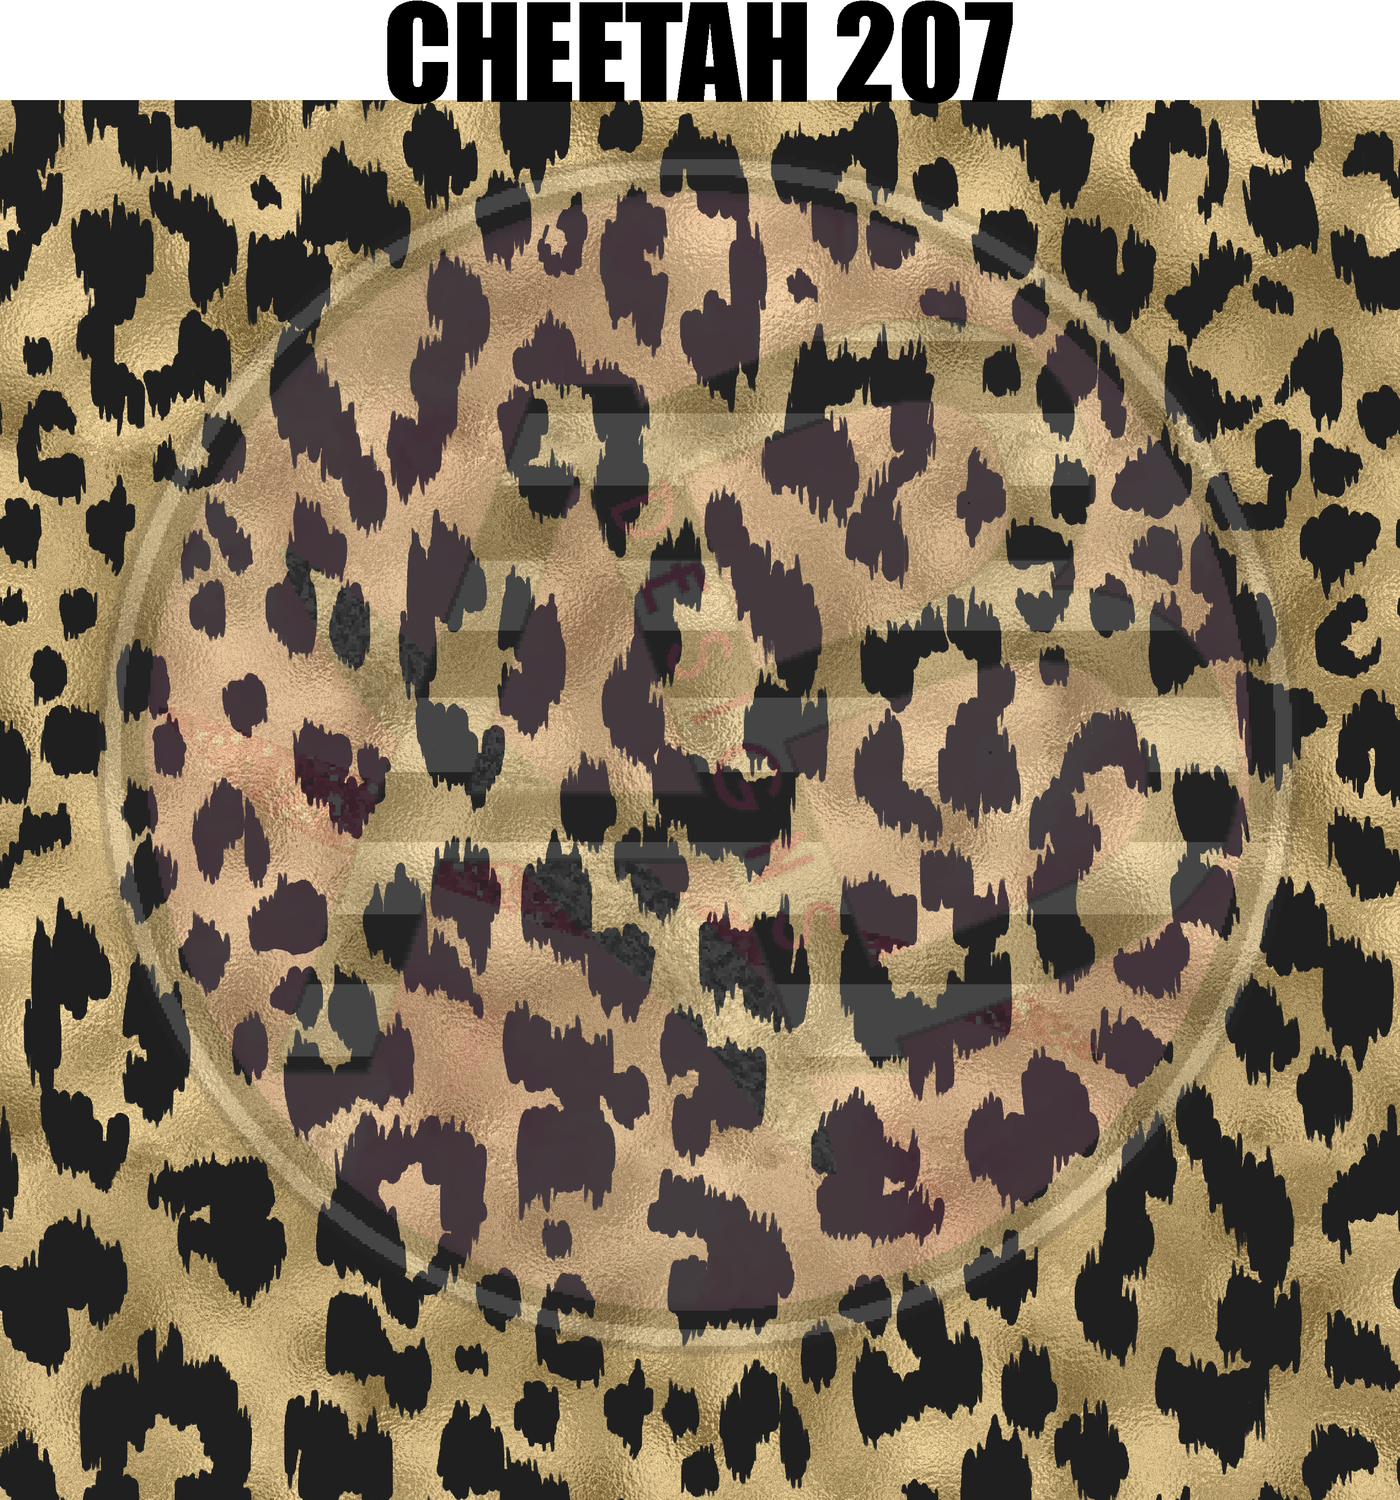 Adhesive Patterned Vinyl - Cheetah 207